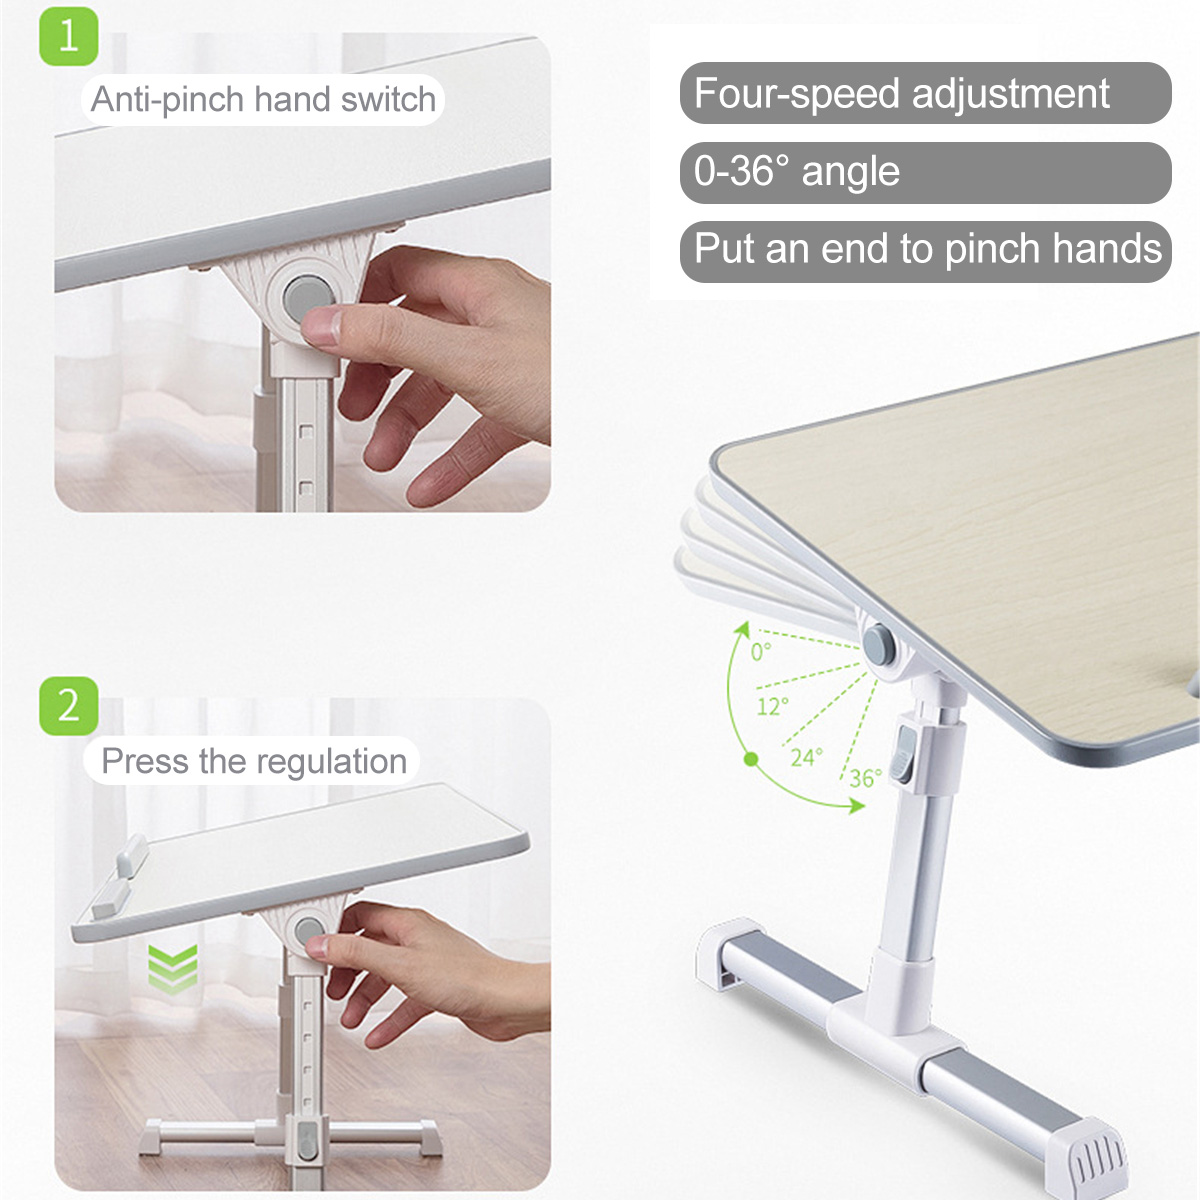 Universal-Folding-Height-Angle-Adjustable-Home-Bed-Macbook-Phone-Holder-Desk-1873295-5